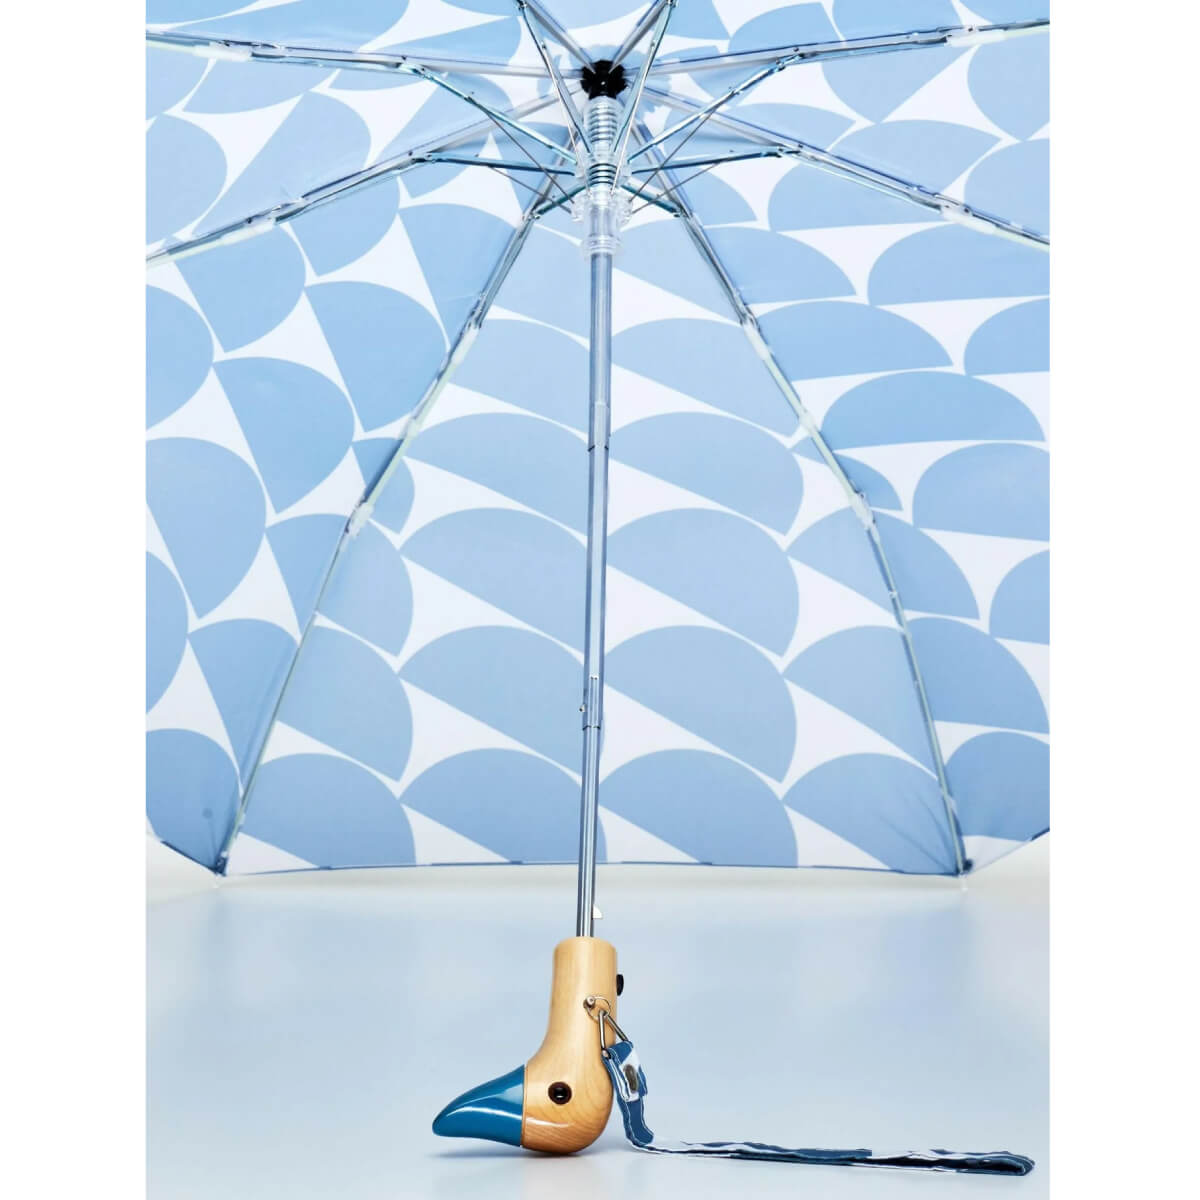 Denim Moon Compact Duckhead Umbrella front | MILK MONEY milkmoney.co | white elephant gift ideas, gift, mother's day gift ideas, white elephant gift, gift shops near me, cute umbrella